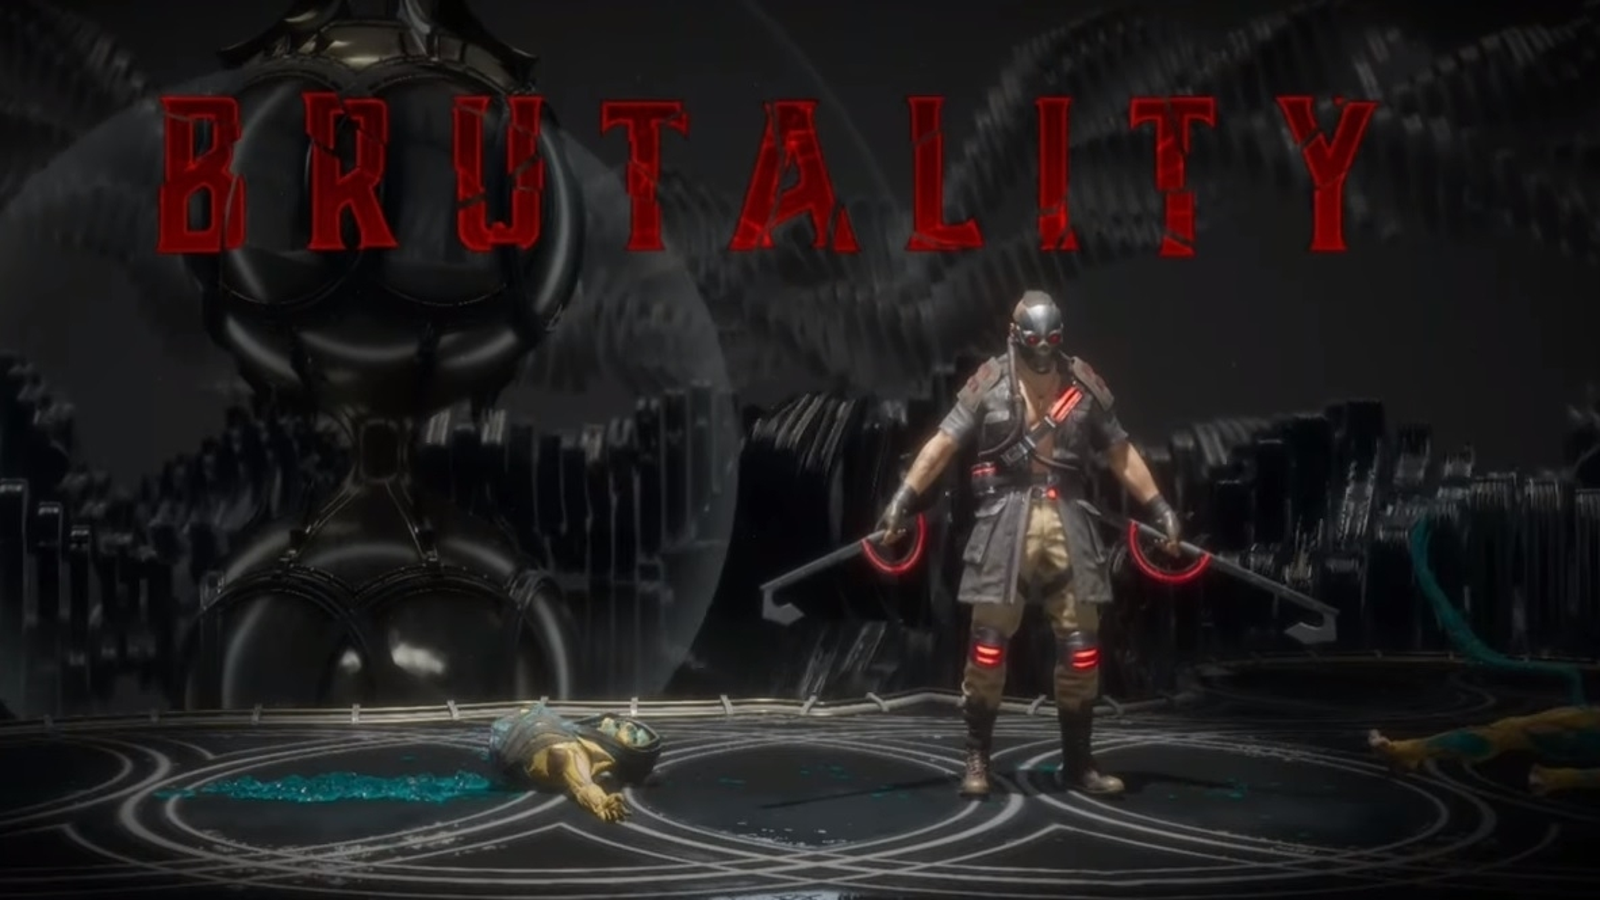 Tudo sobre Mortal Kombat 11, dos personagens aos brutalities